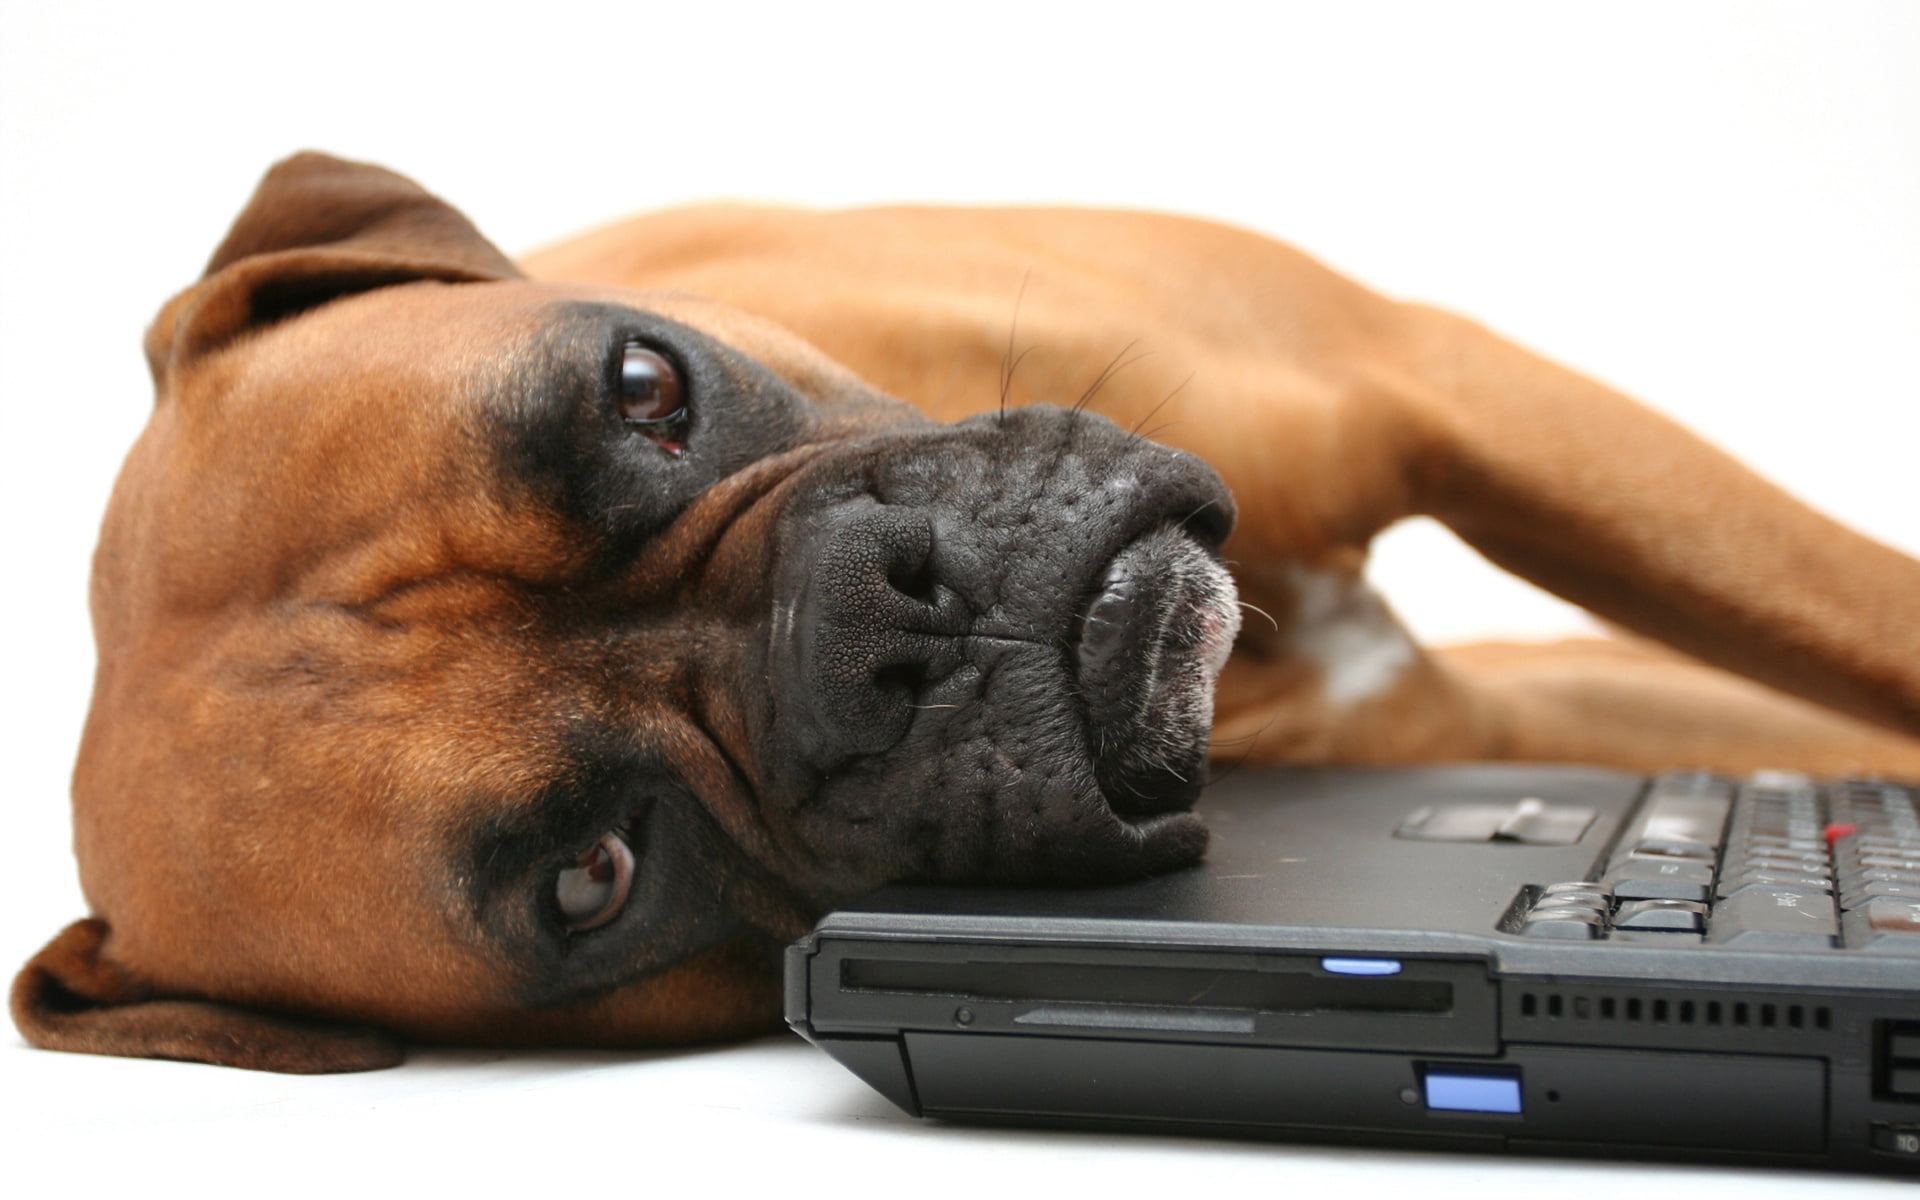 adult tan Boxer lying on black laptop computer